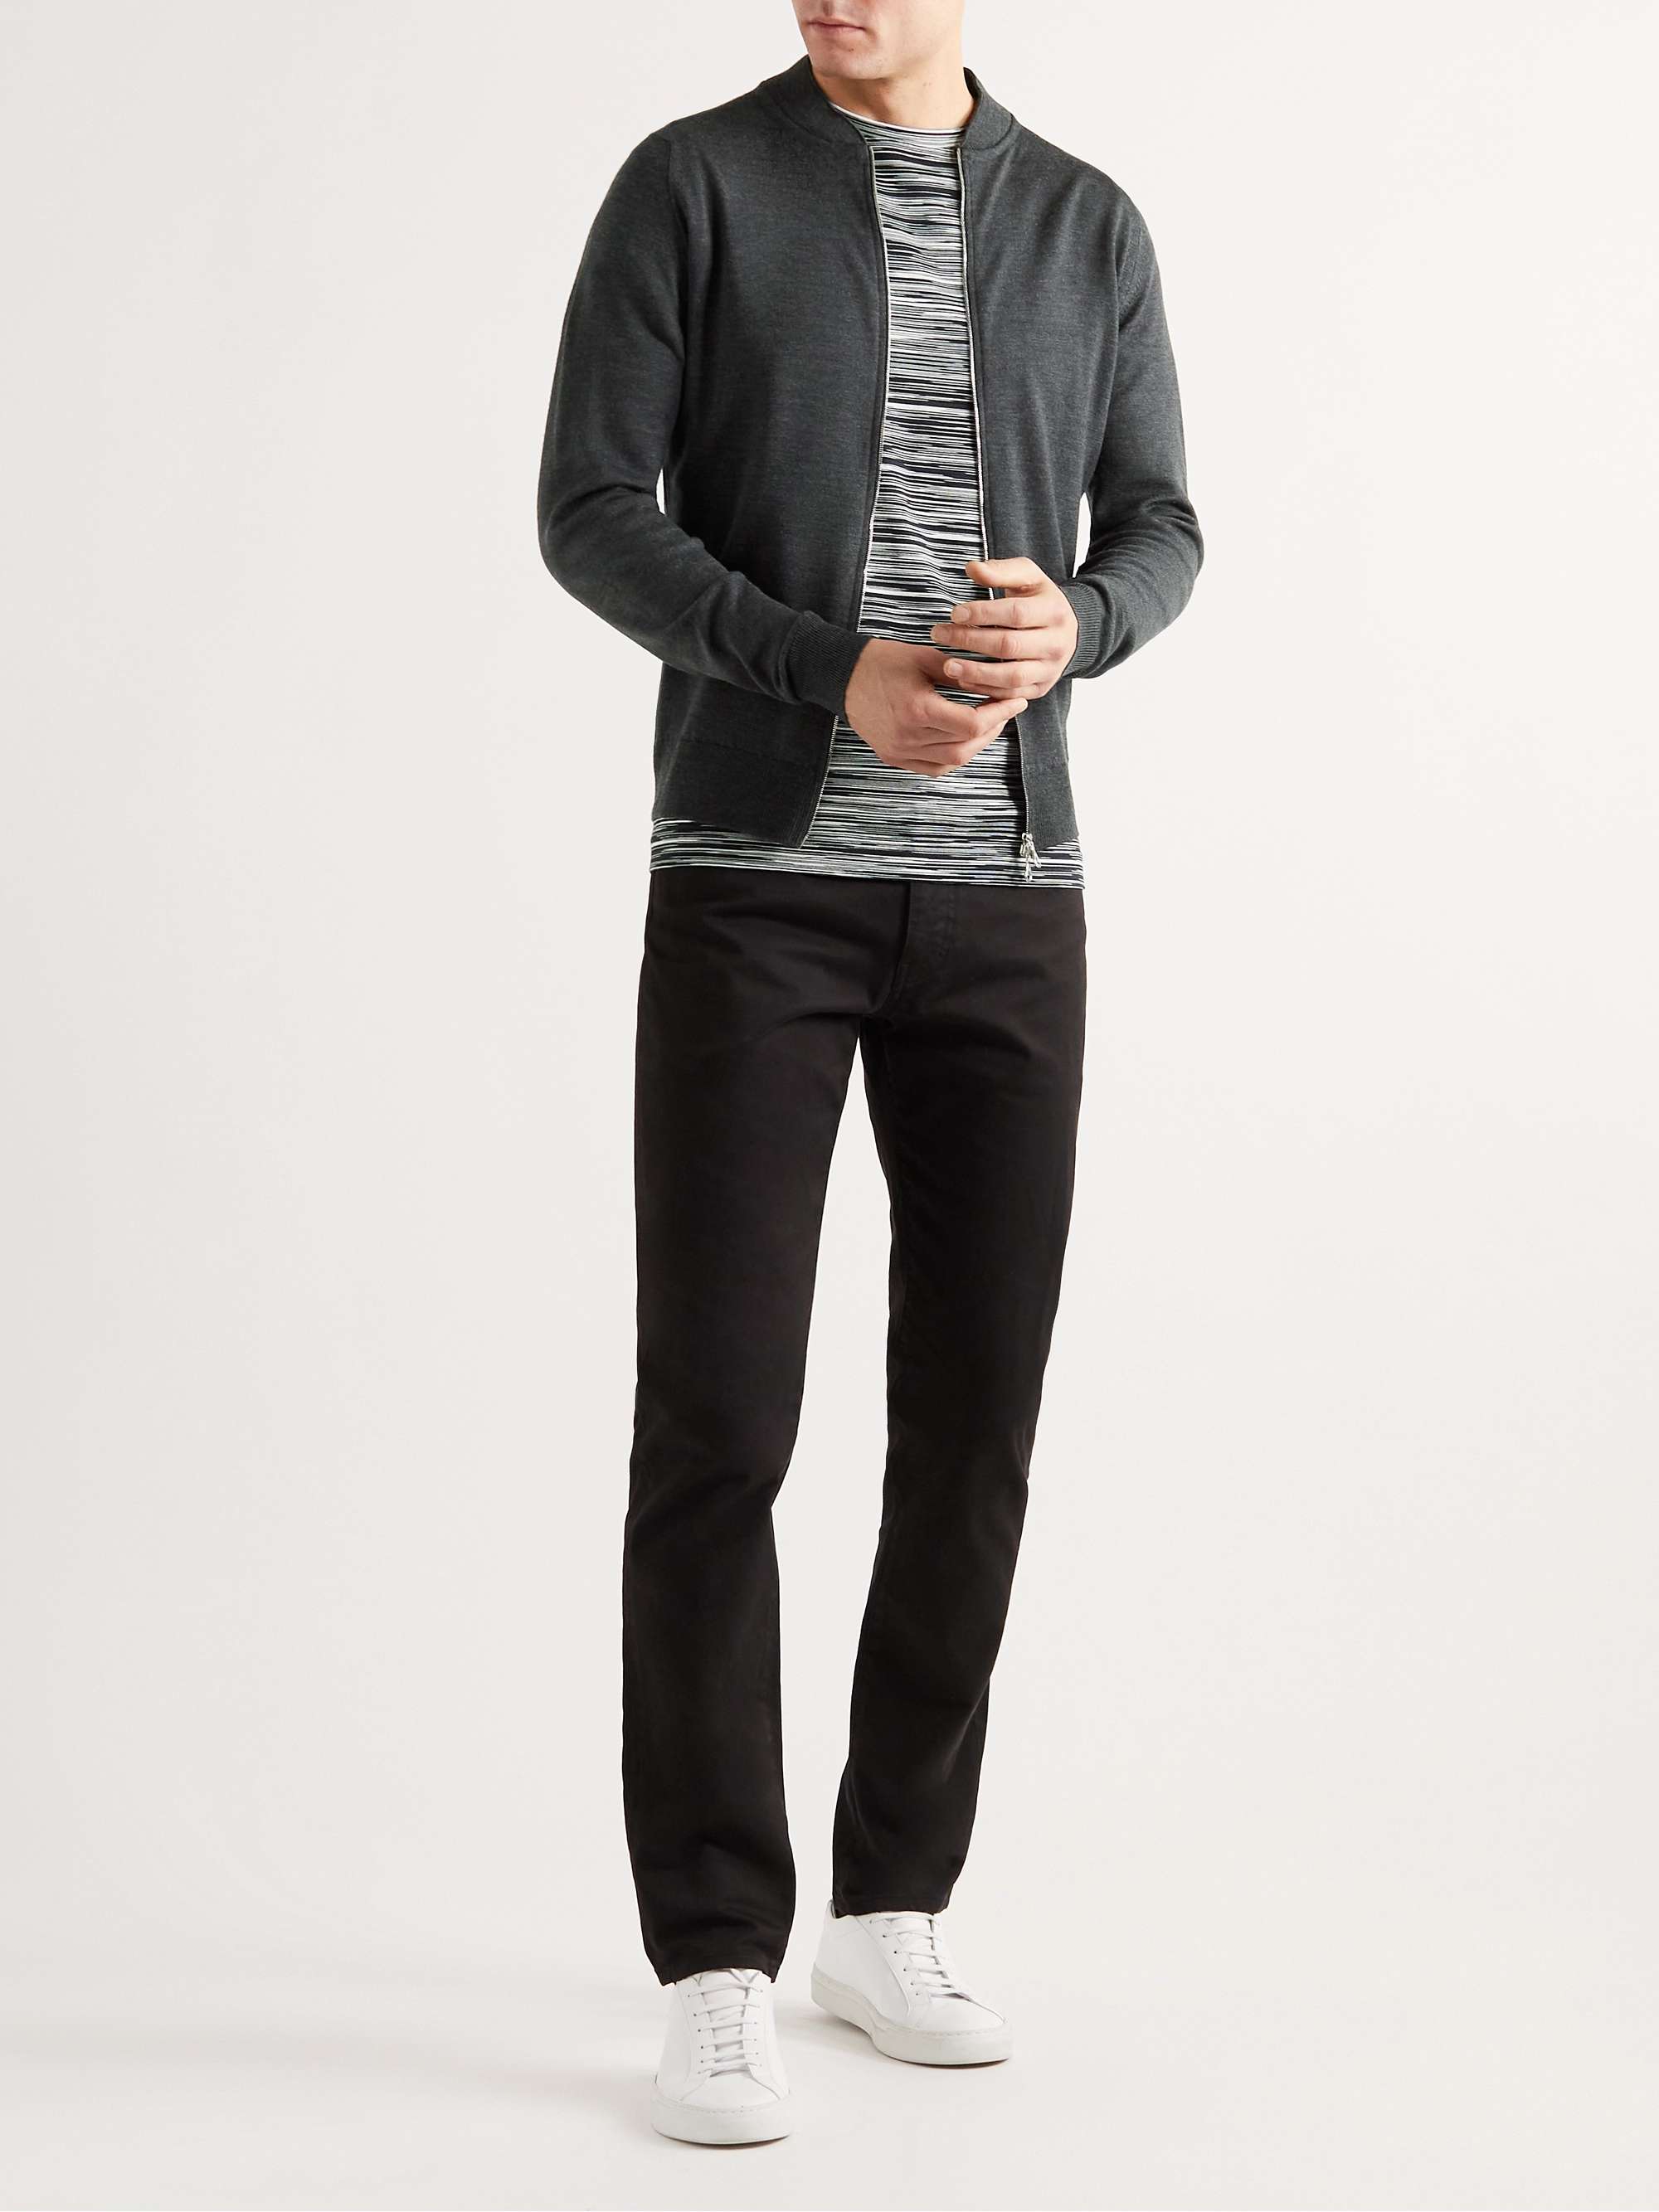 Charcoal Slim-Fit Merino Wool Zip-Up Cardigan | JOHN SMEDLEY | MR 